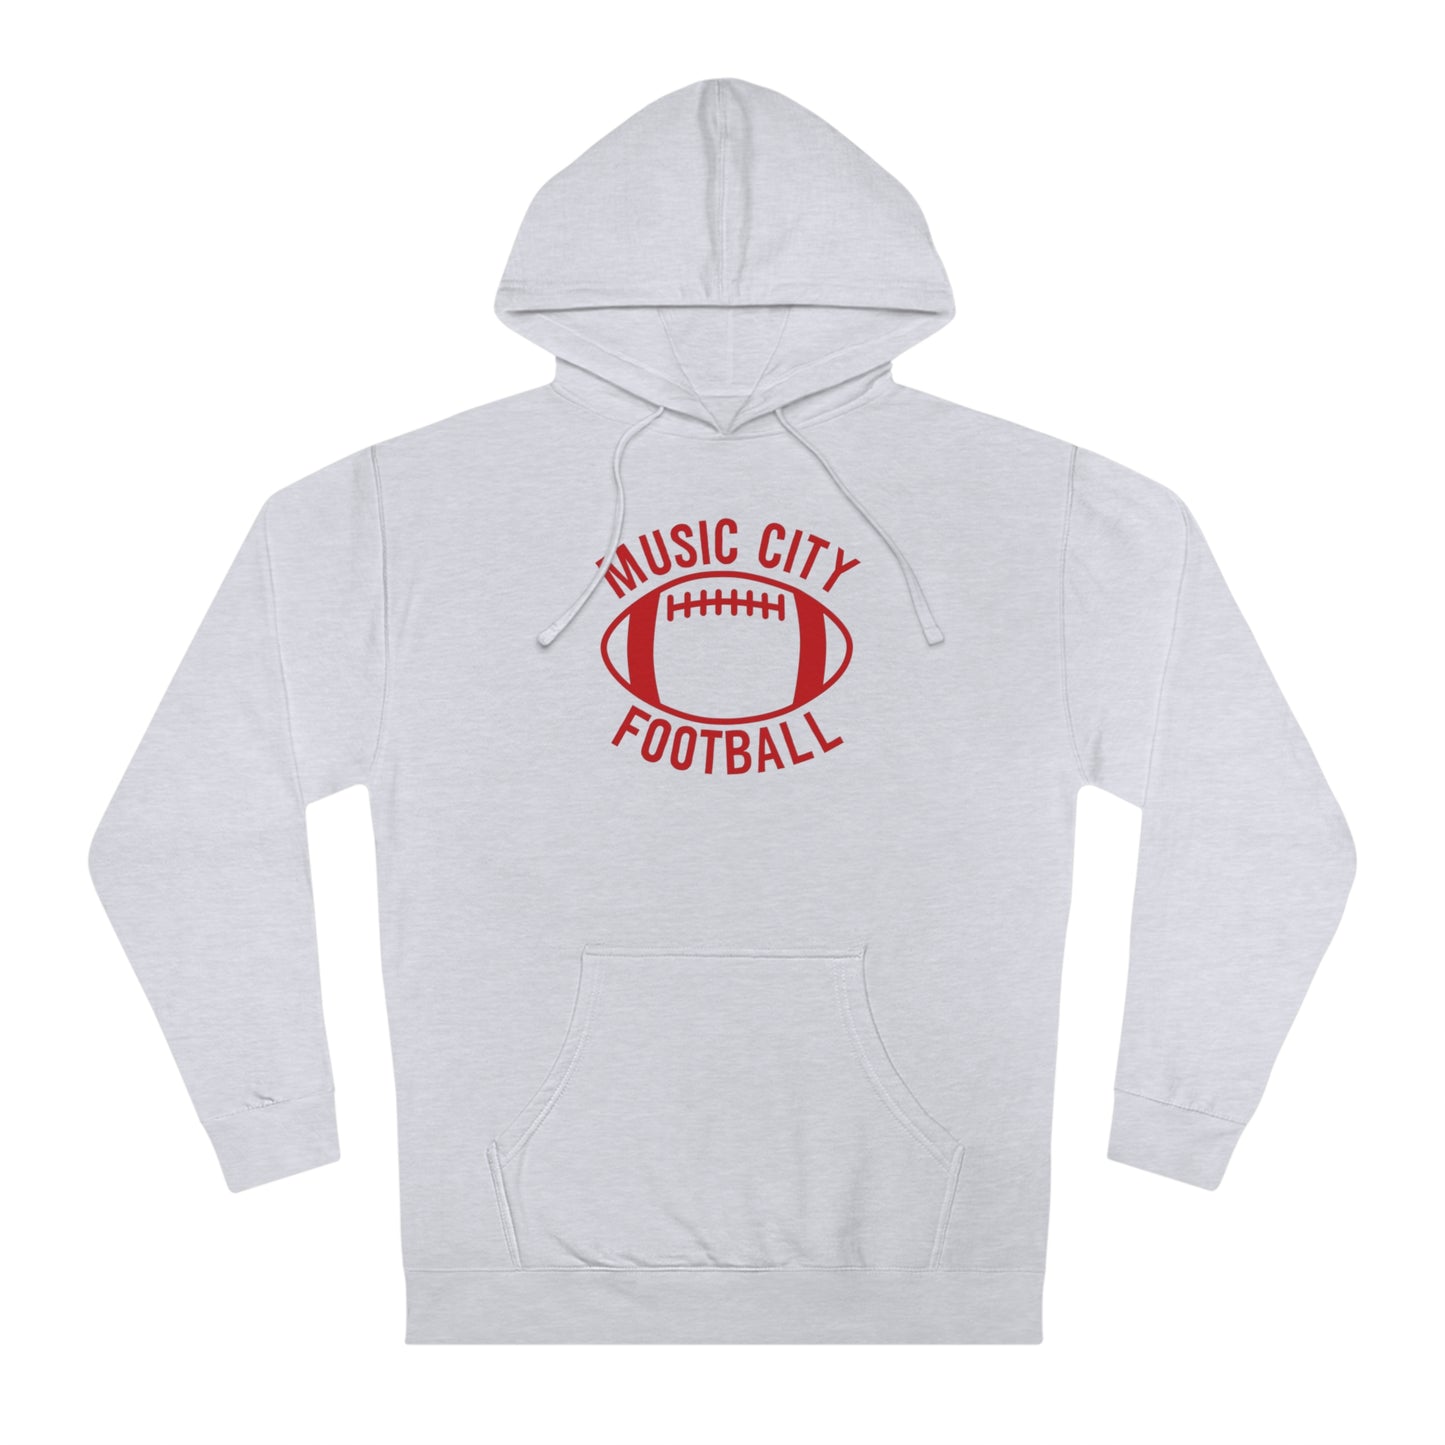 Music City Football Unisex Hooded Sweatshirt